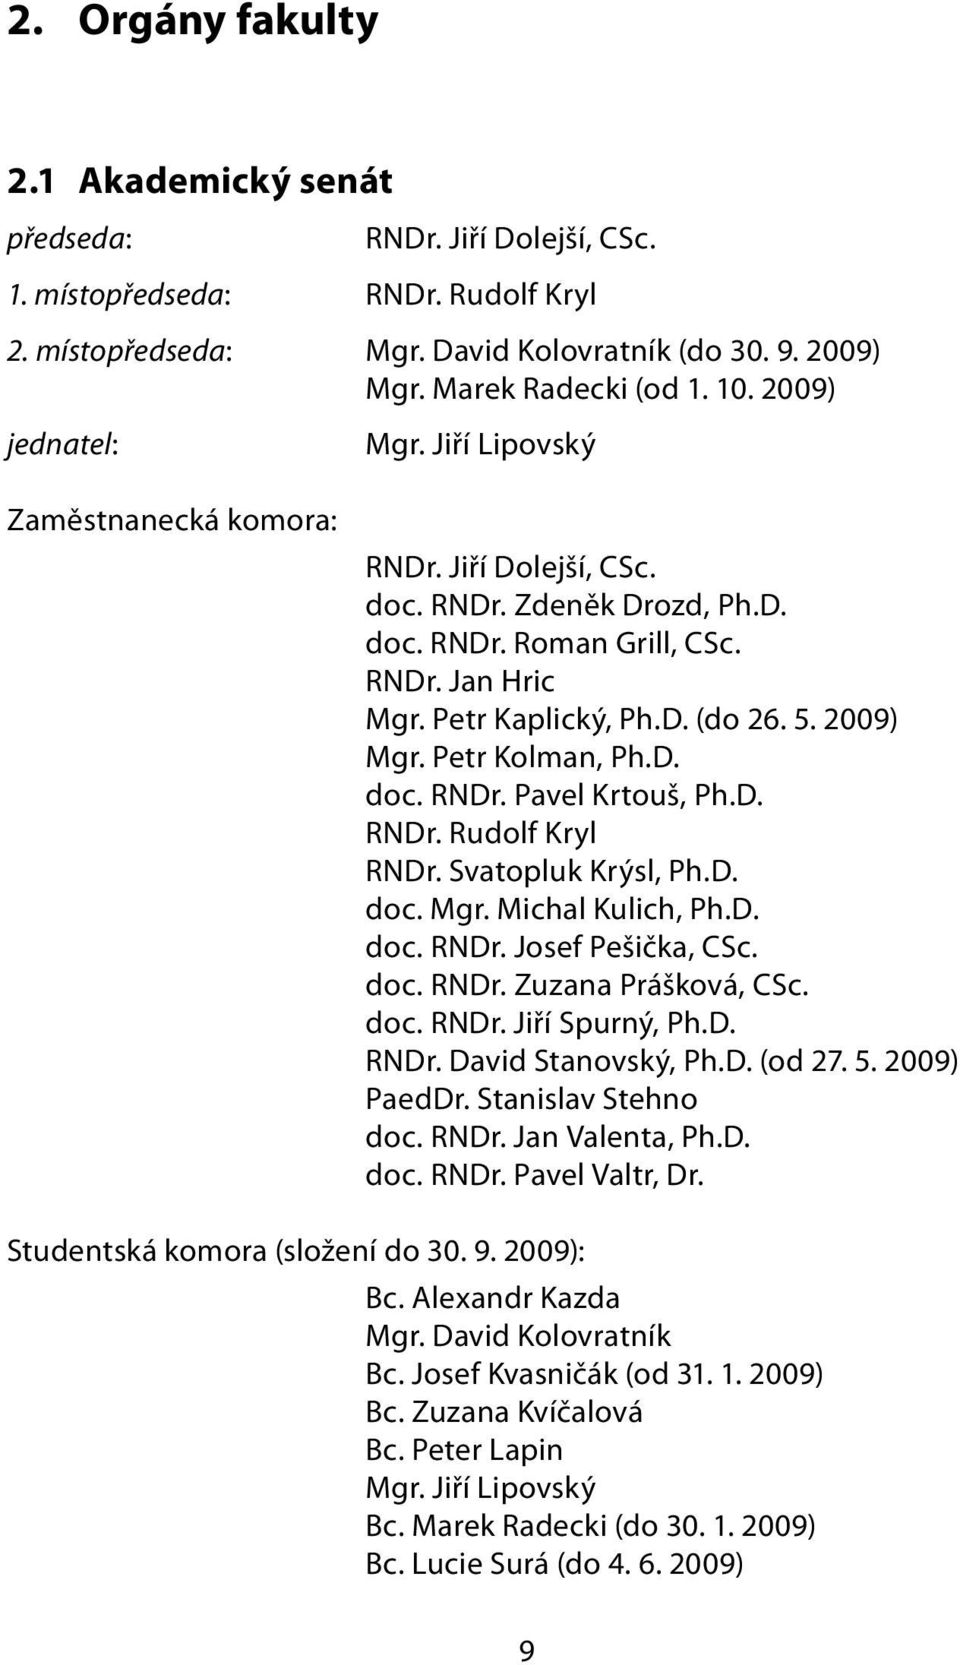 2009) Mgr. Petr Kolman, Ph.D. doc. RNDr. Pavel Krtouš, Ph.D. RNDr. Rudolf Kryl RNDr. Svatopluk Krýsl, Ph.D. doc. Mgr. Michal Kulich, Ph.D. doc. RNDr. Josef Pešička, CSc. doc. RNDr. Zuzana Prášková, CSc.